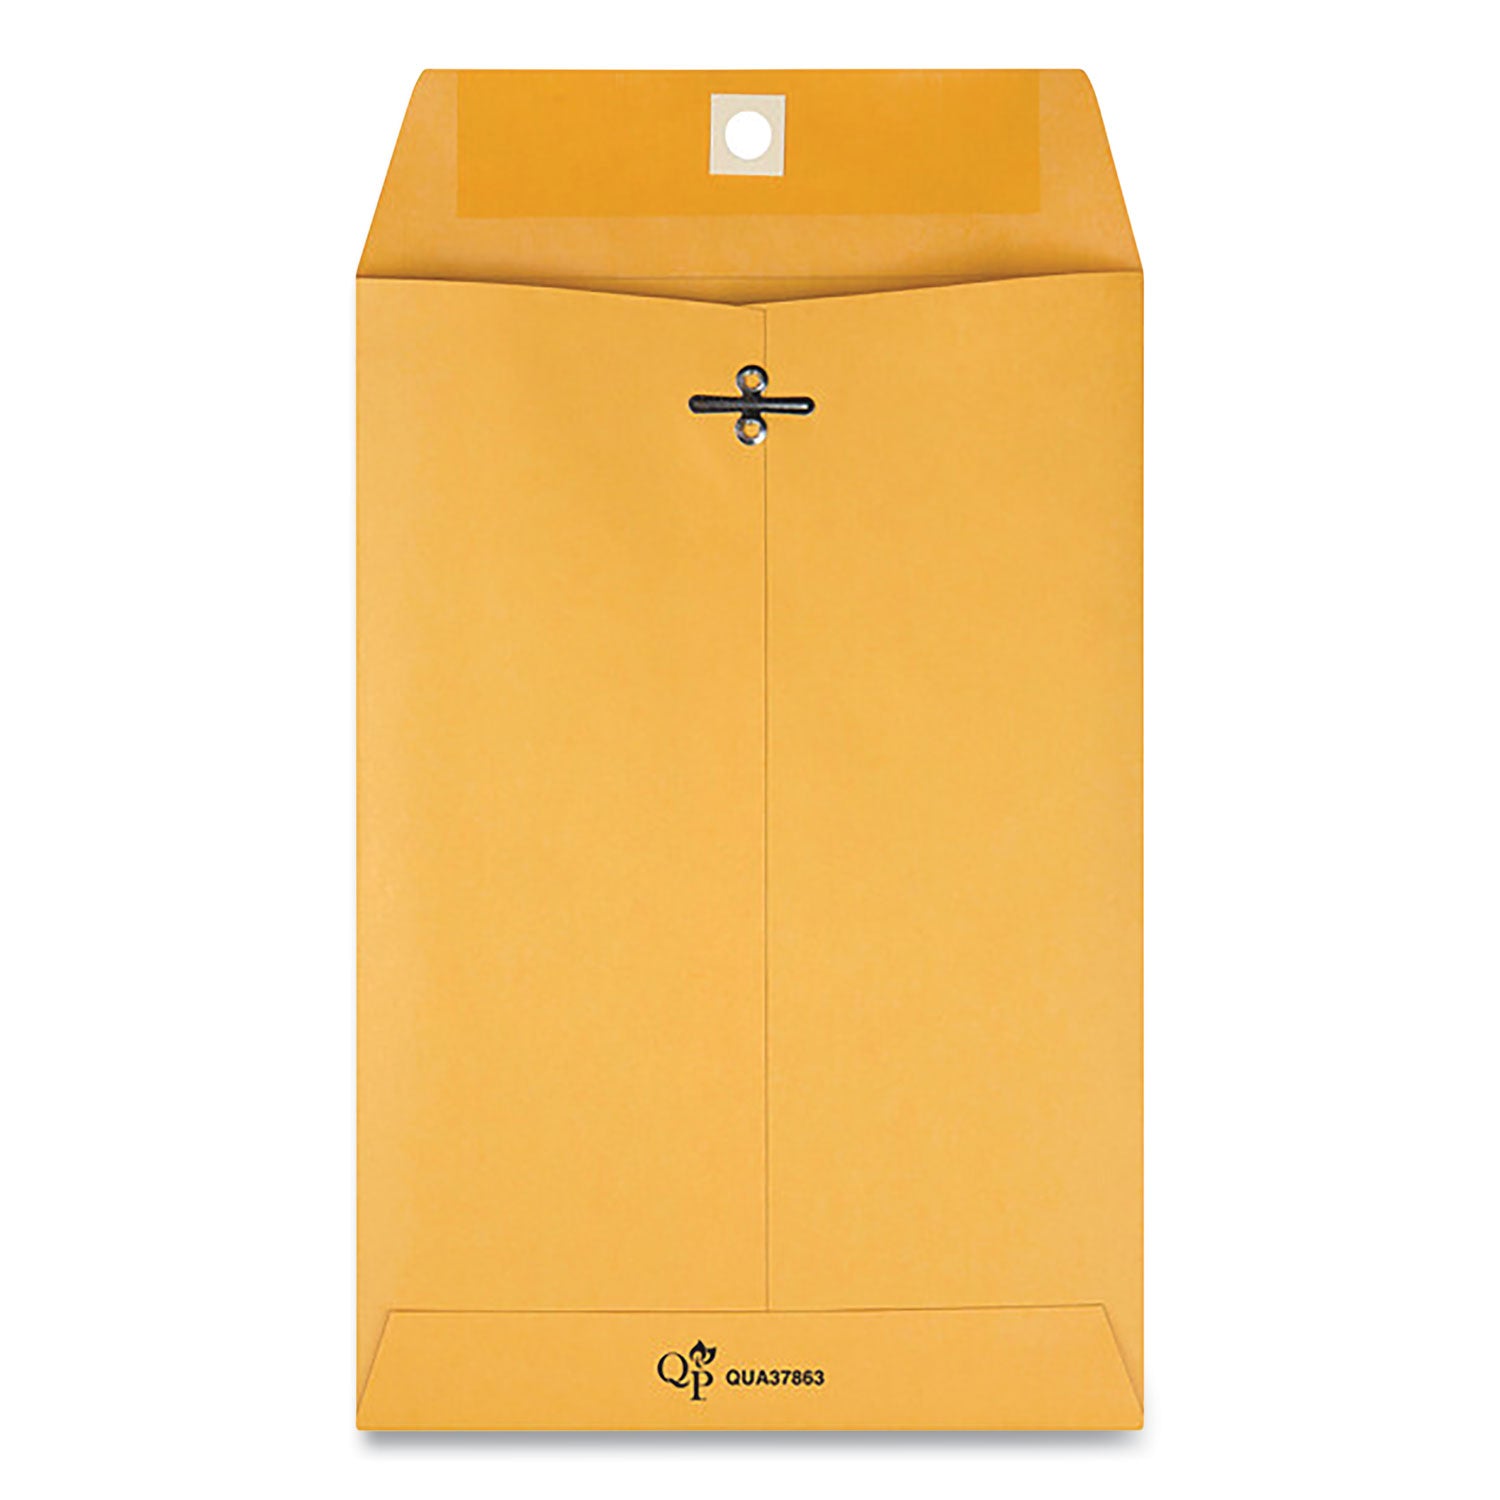 Clasp Envelope, 28 lb Bond Weight Kraft, #63, Square Flap, Clasp/Gummed Closure, 6.5 x 9.5, Brown Kraft, 100/Box - 